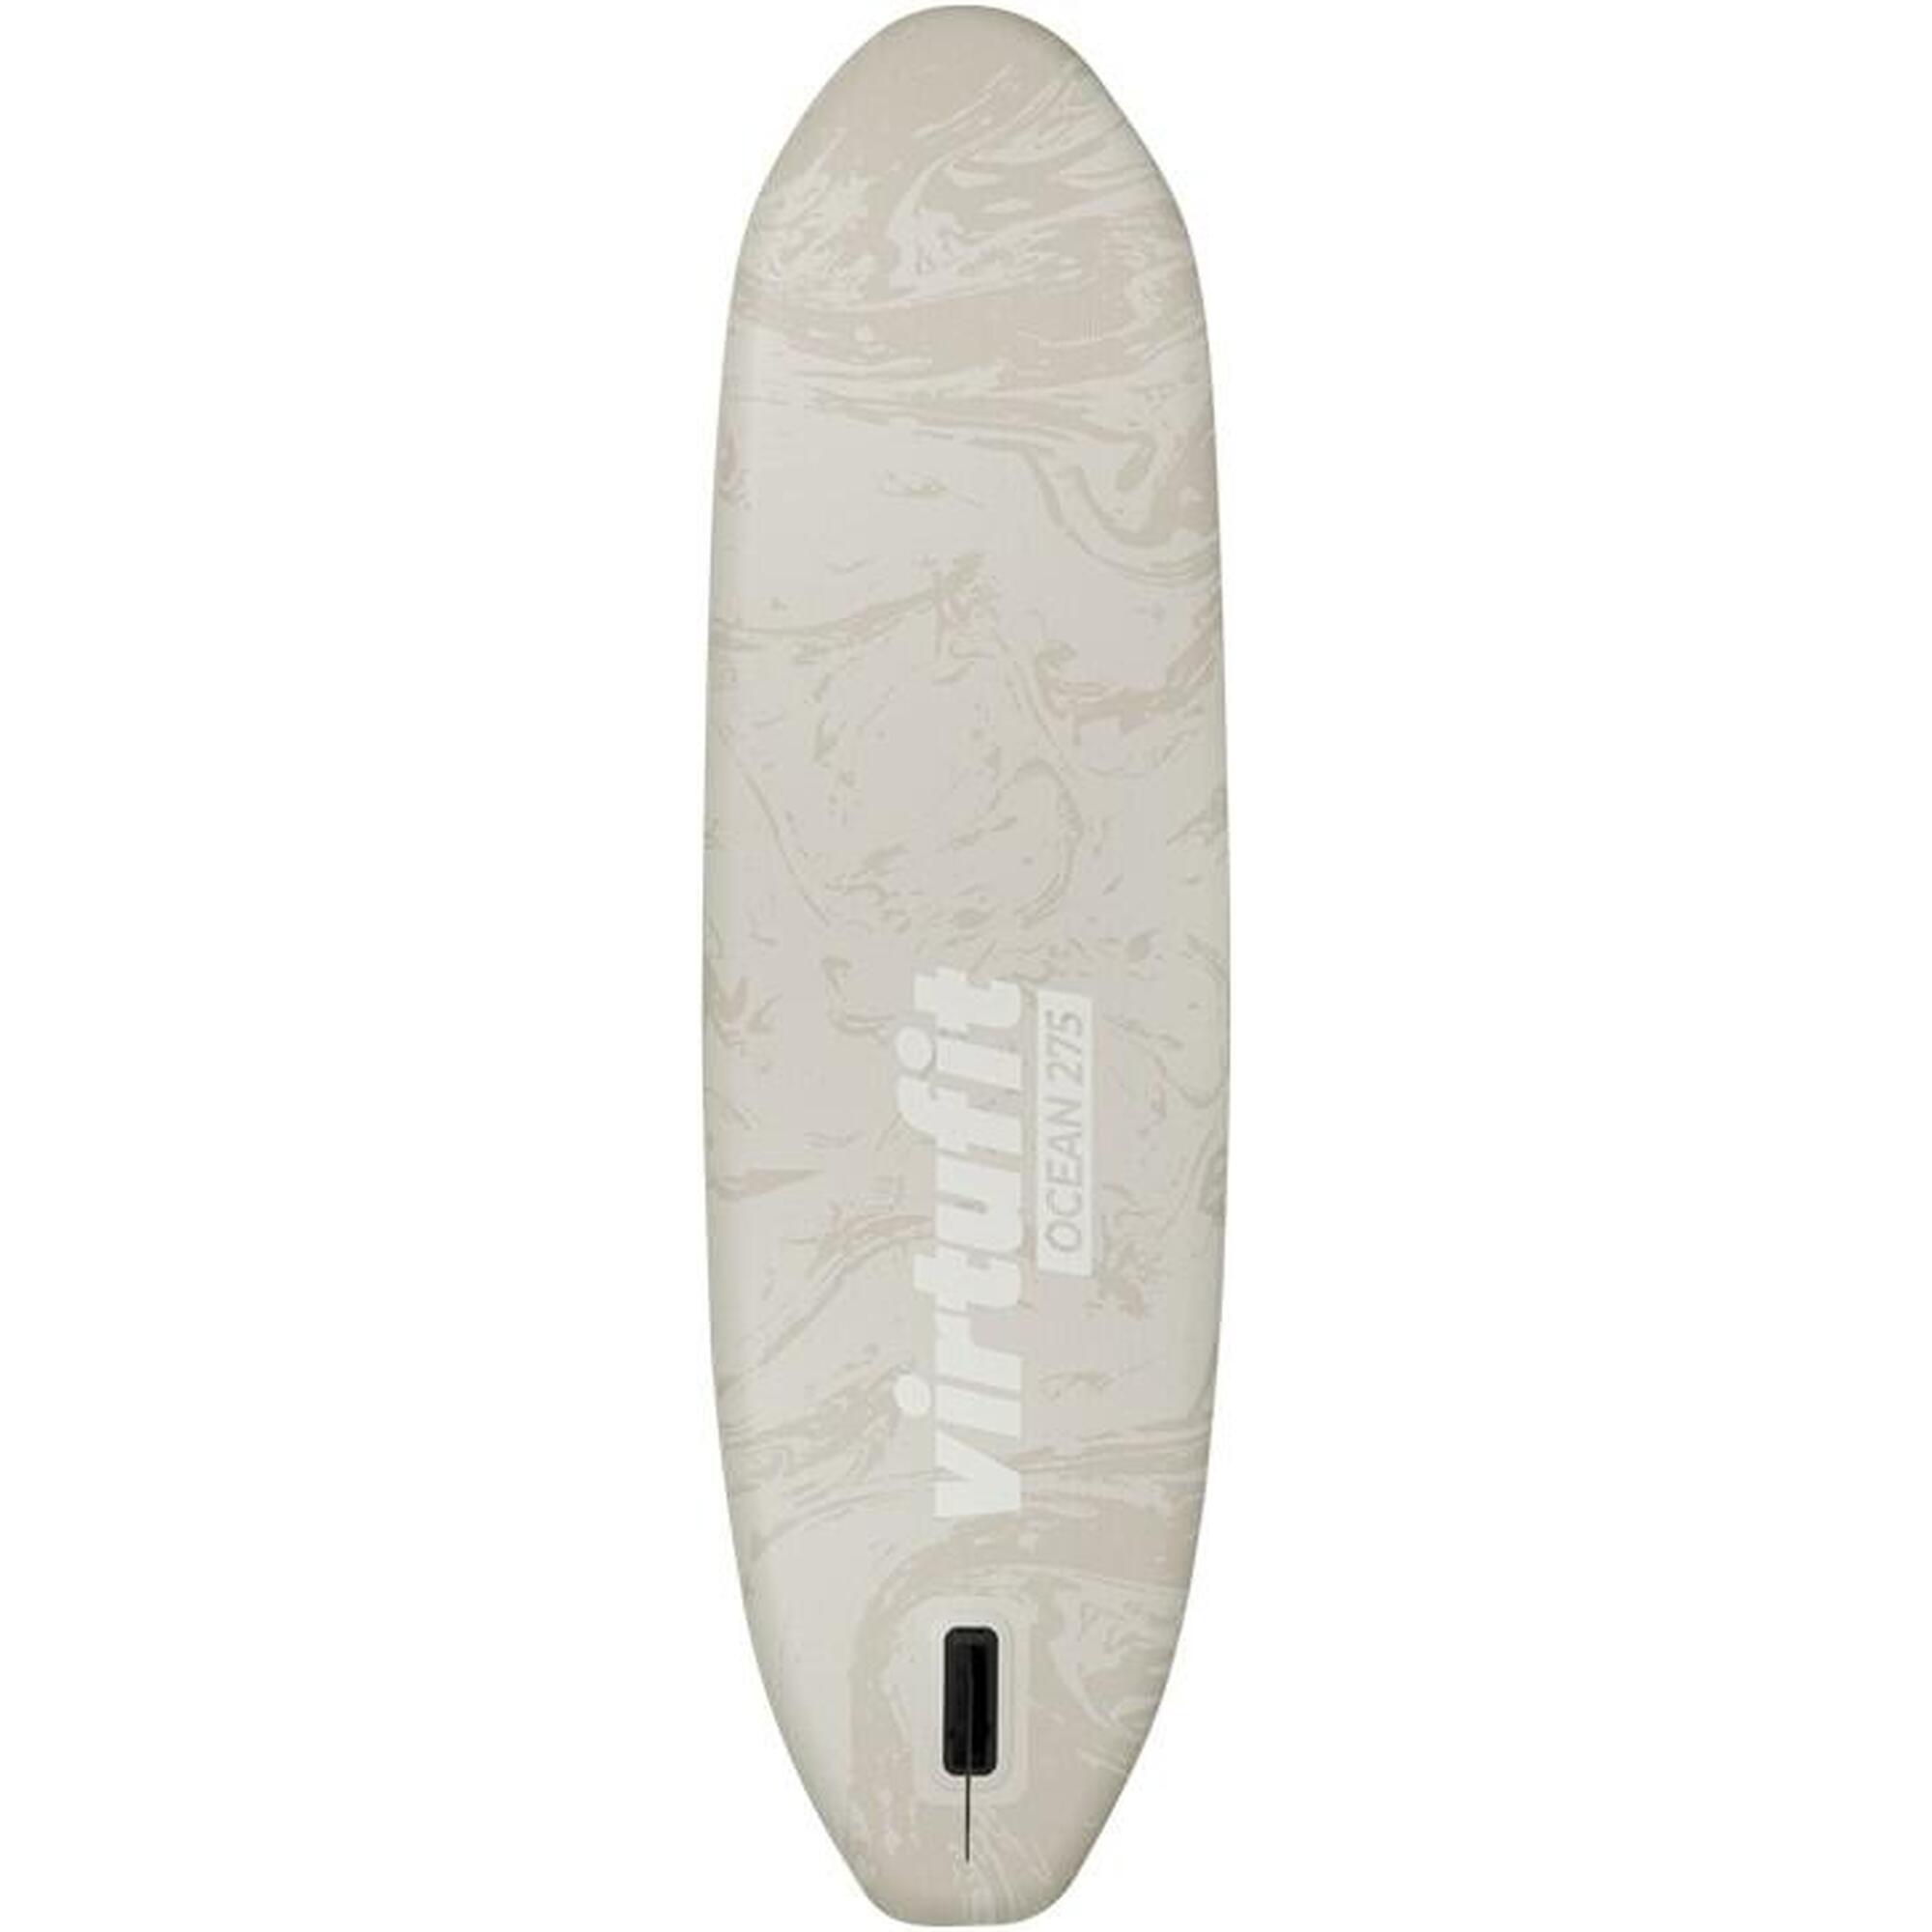 Supboard Ocean 275 - Beige - Met accessoires en draagtas